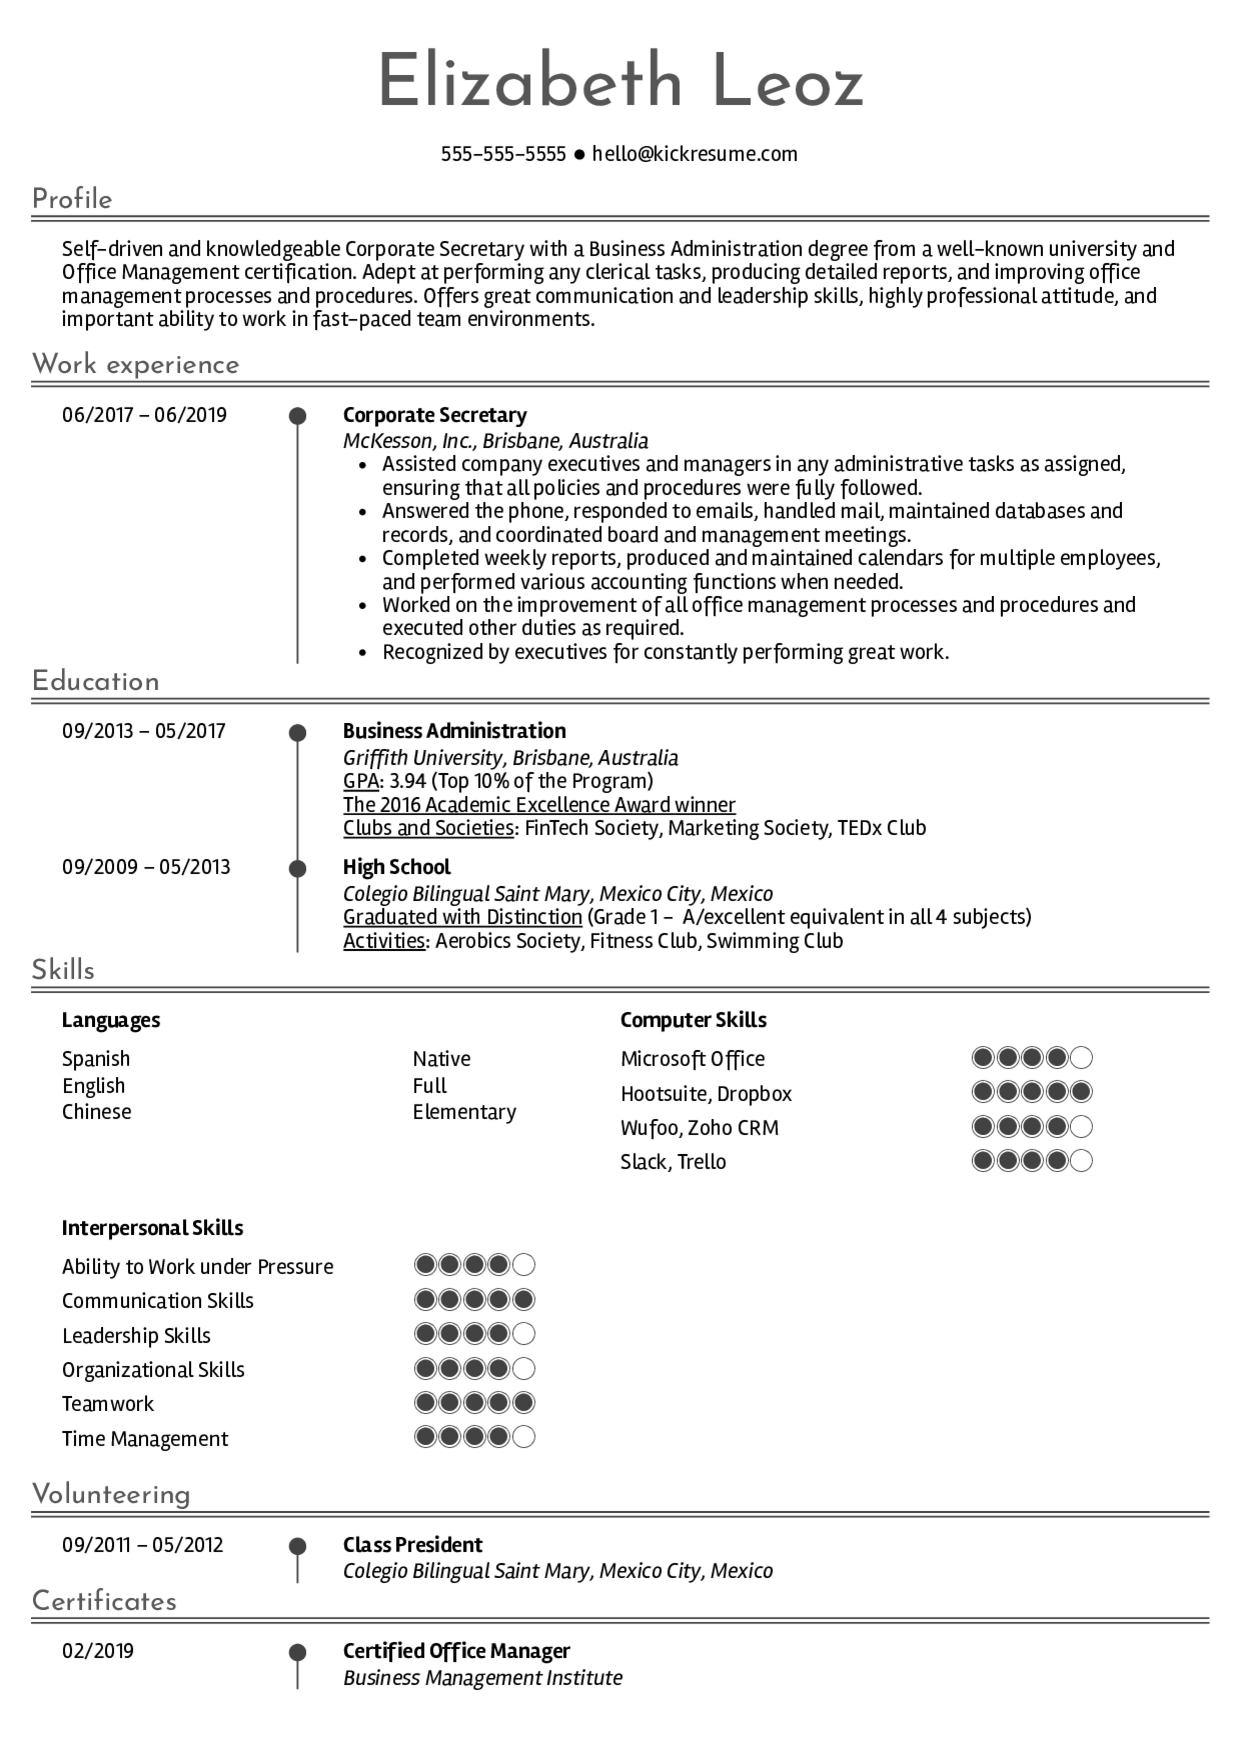 Resume Examplesreal People: Corporate Secretary Resume With Regard To Corporate Secretary Certificate Template